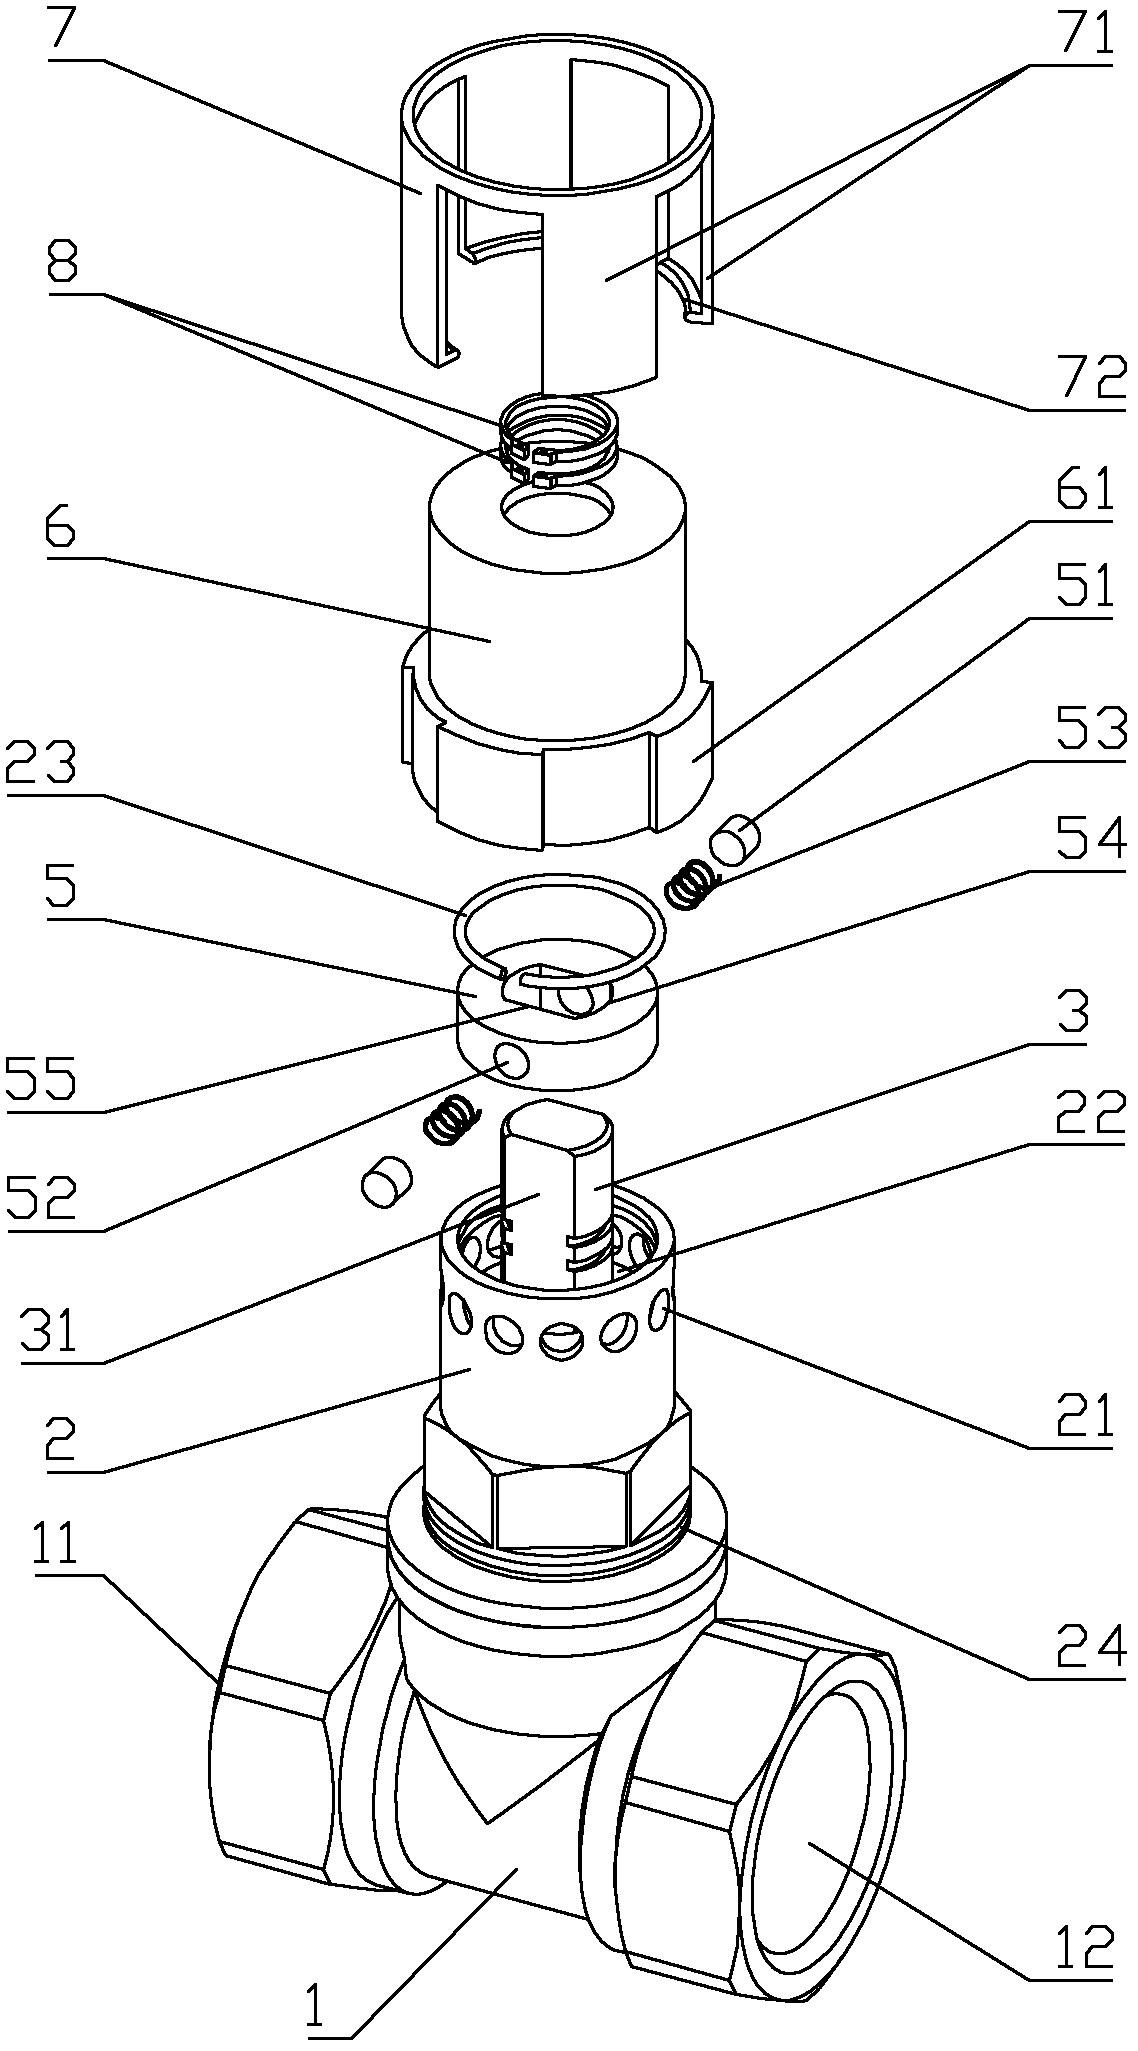 High-precision flow regulating valve with lock